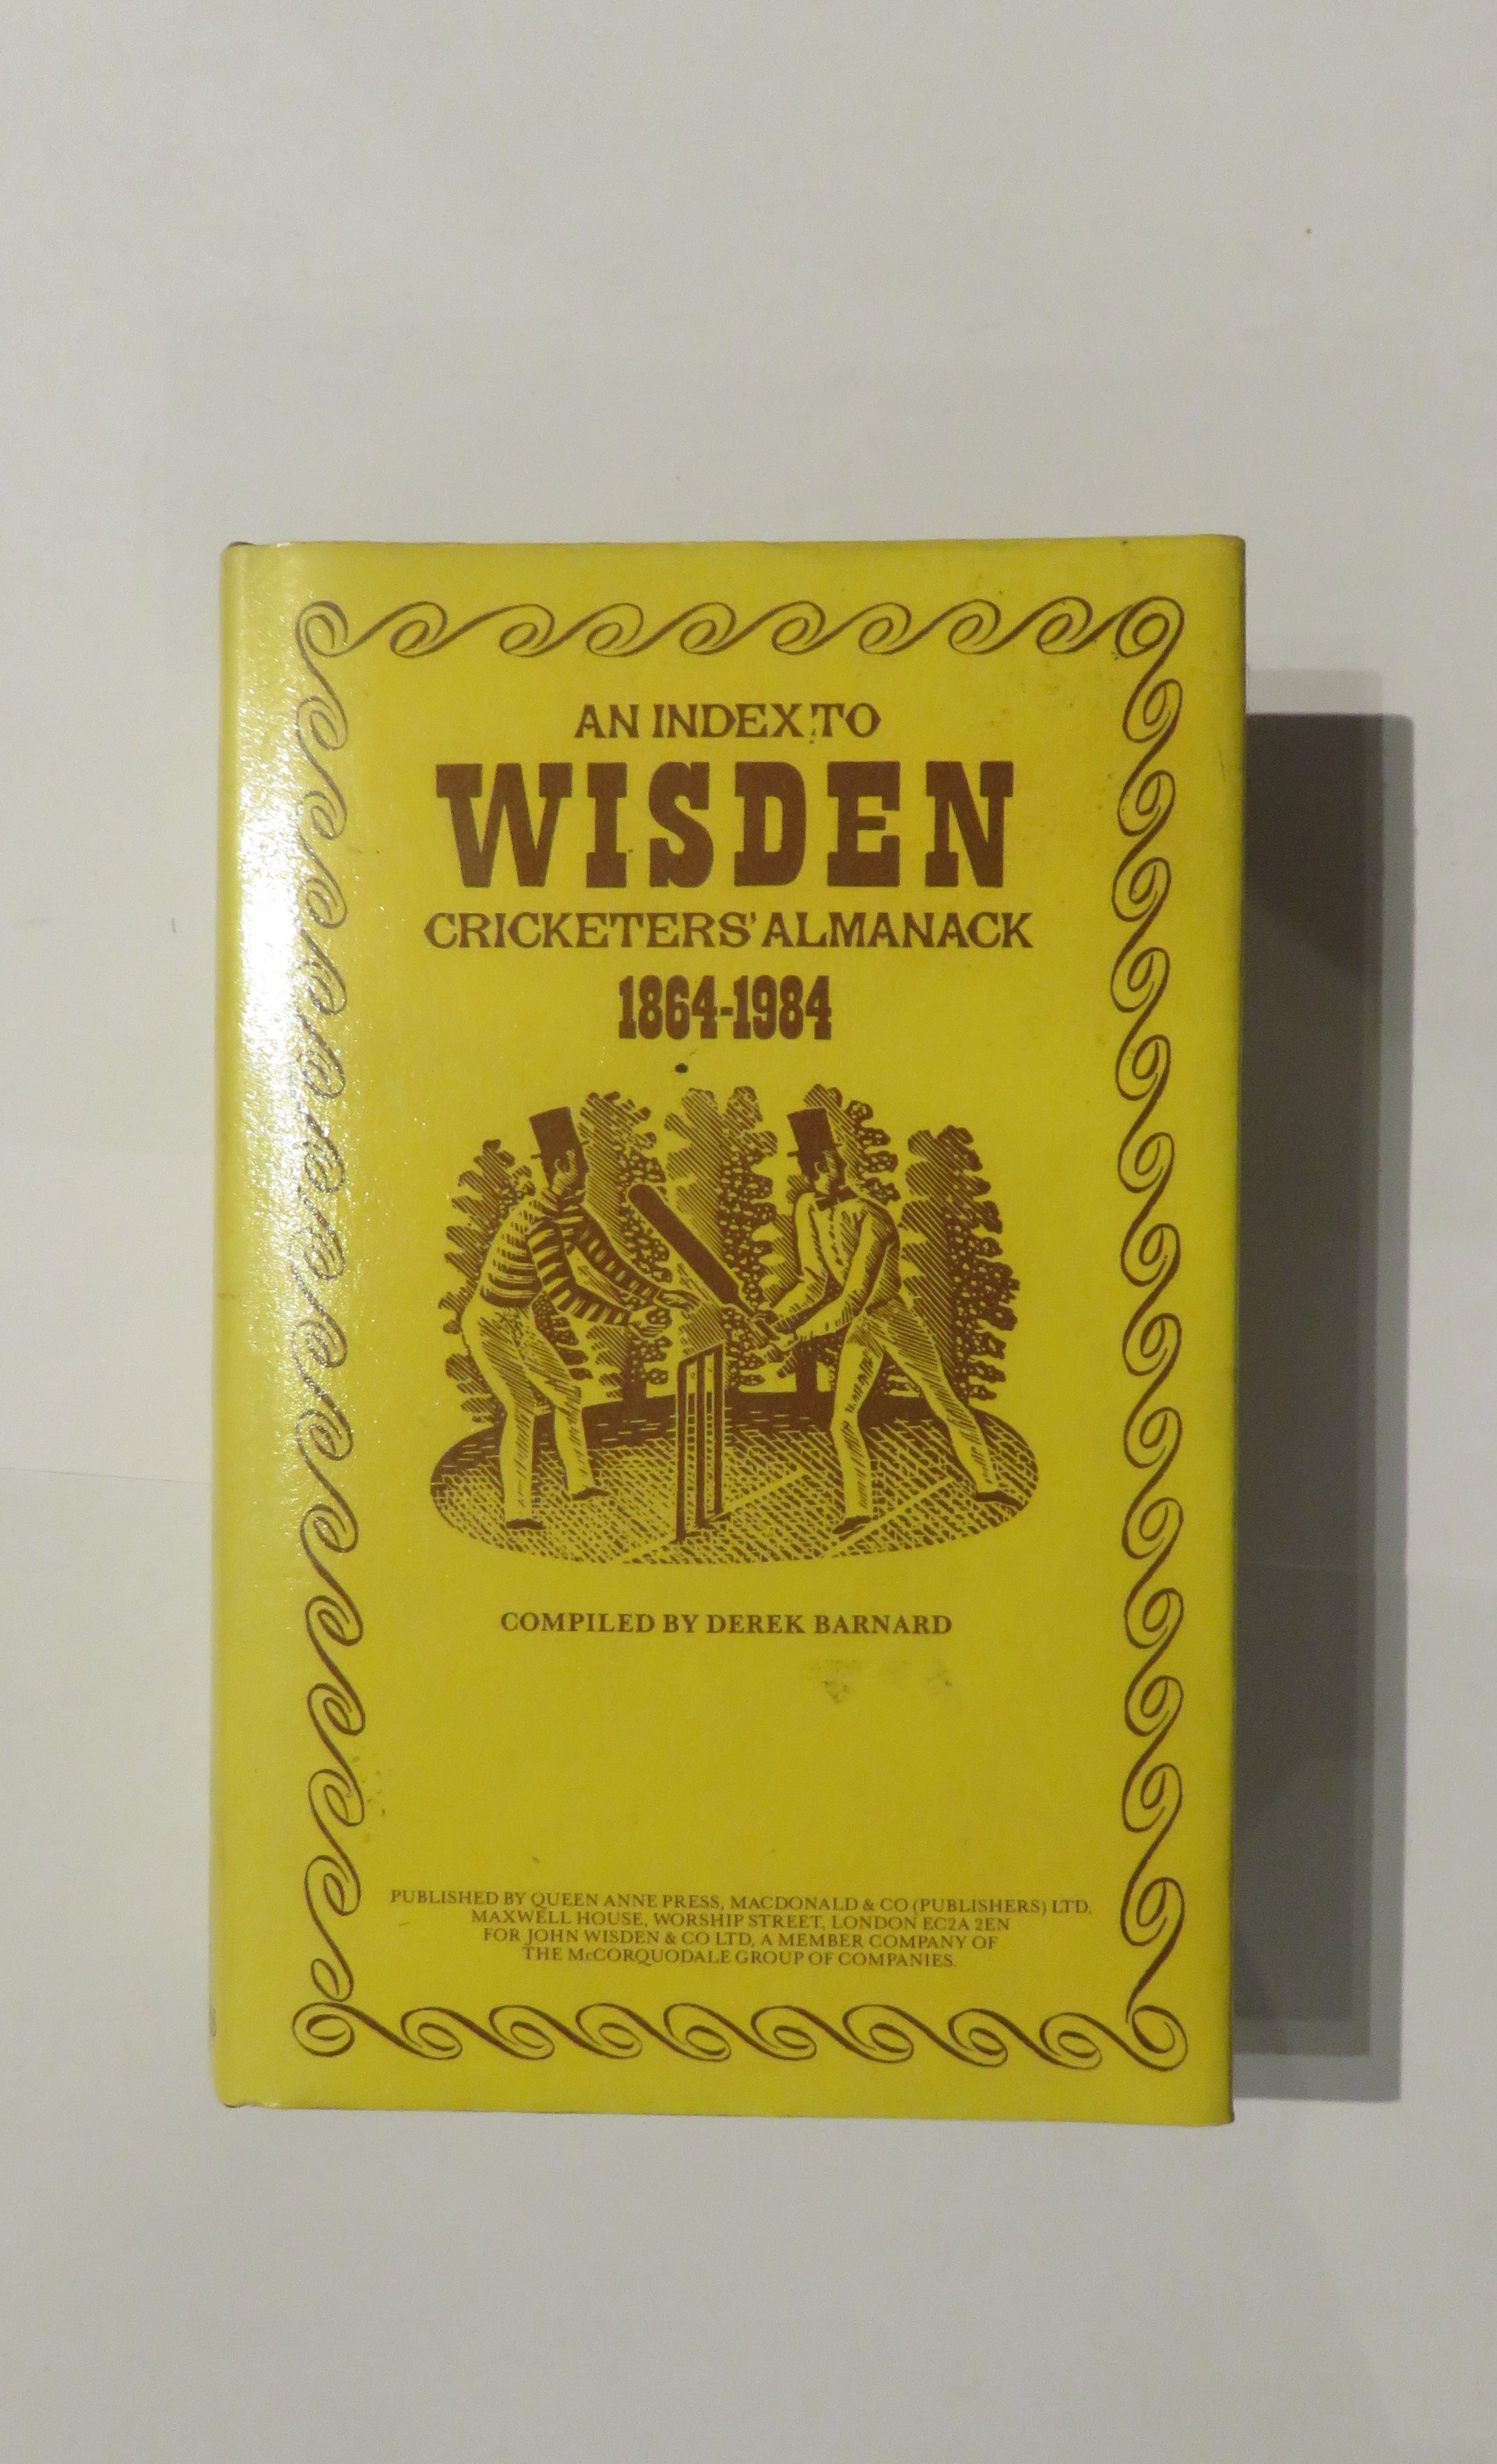 An Index to Wisden Cricketers' Almanack 1864-1984